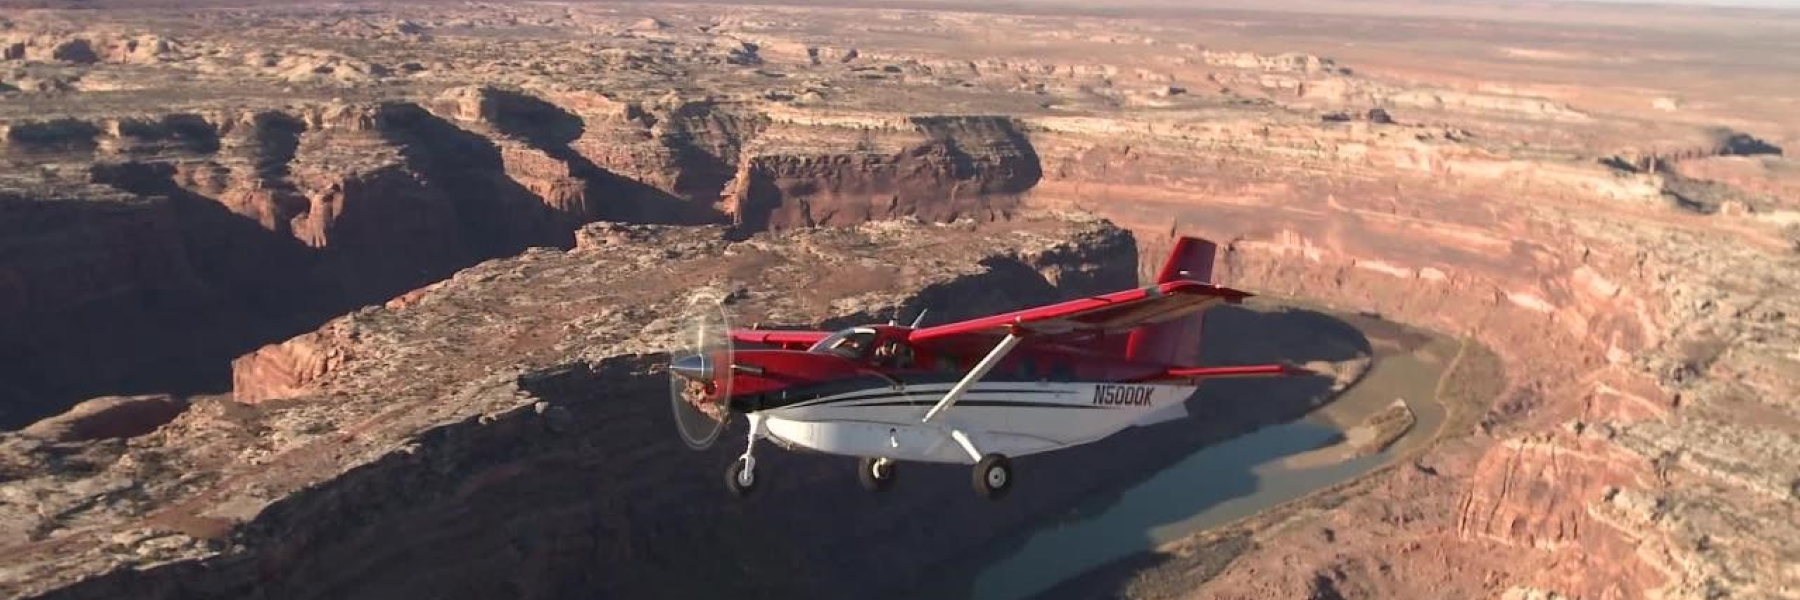 RedtailConnect Charter Flights from Moab, Utah to Salt Lake City or Vernal Utah